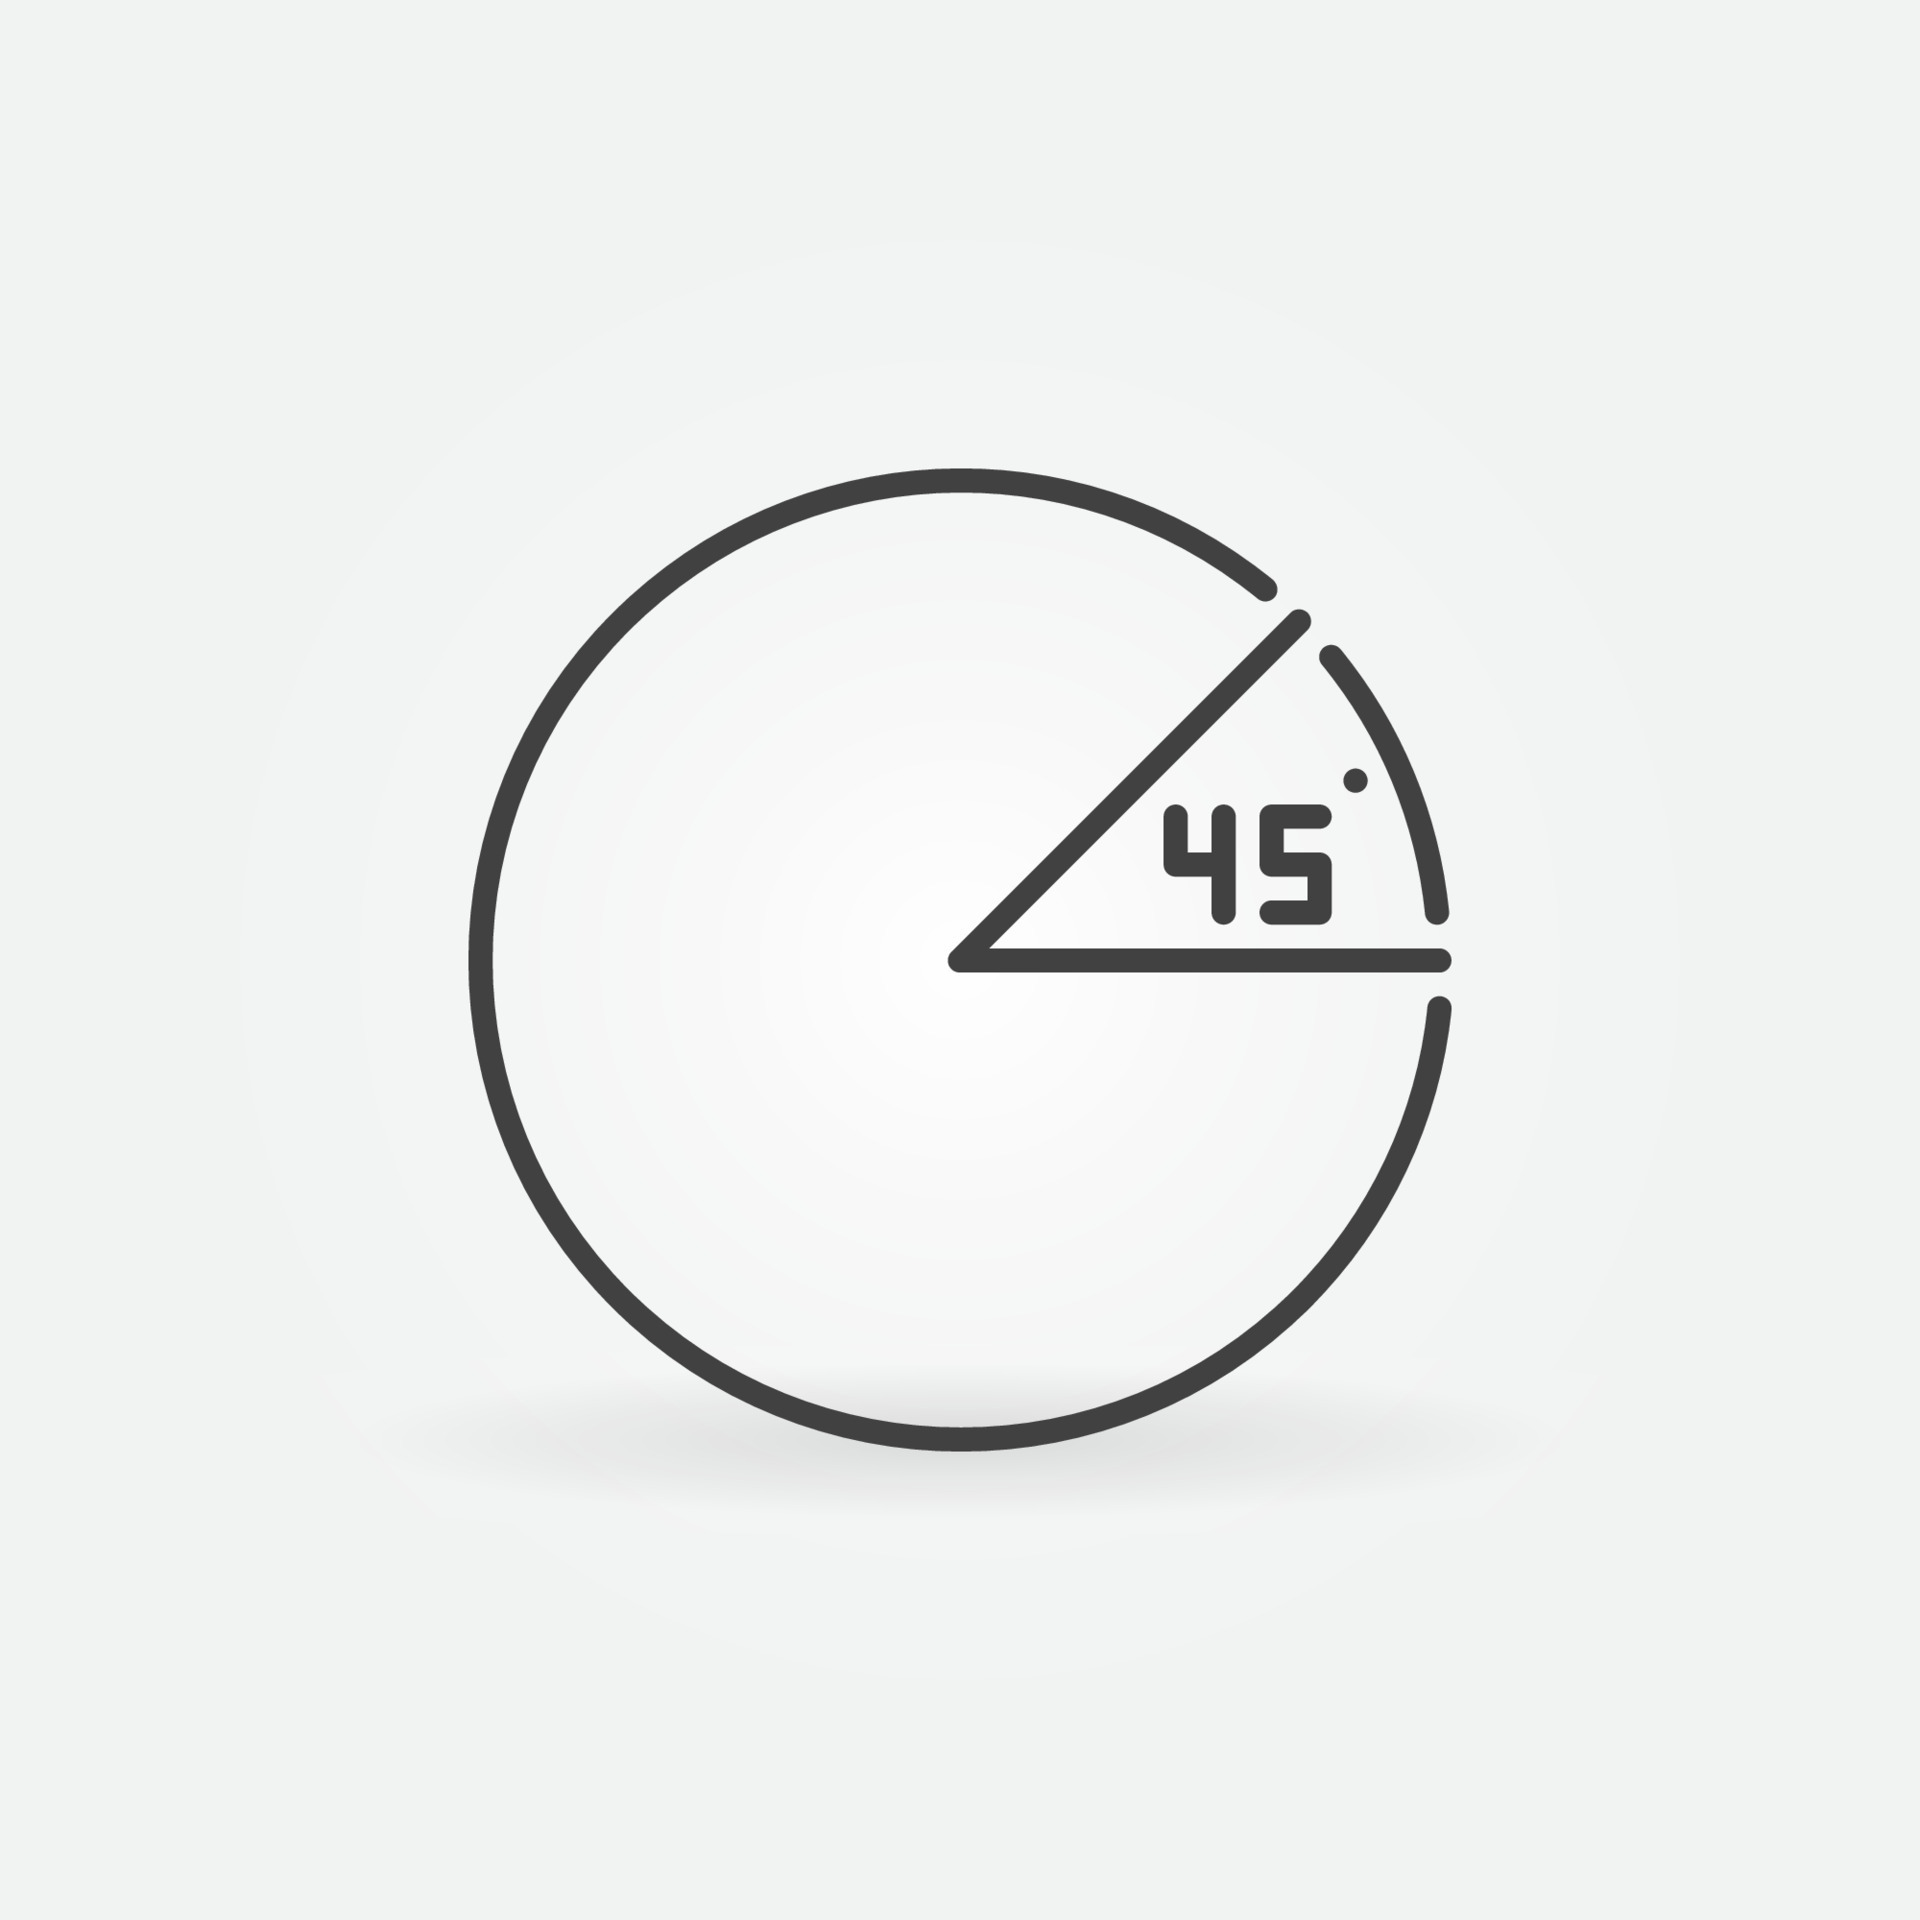 Ângulo de 45 graus no ícone de contorno mínimo do conceito de vetor de  círculo 13448378 Vetor no Vecteezy